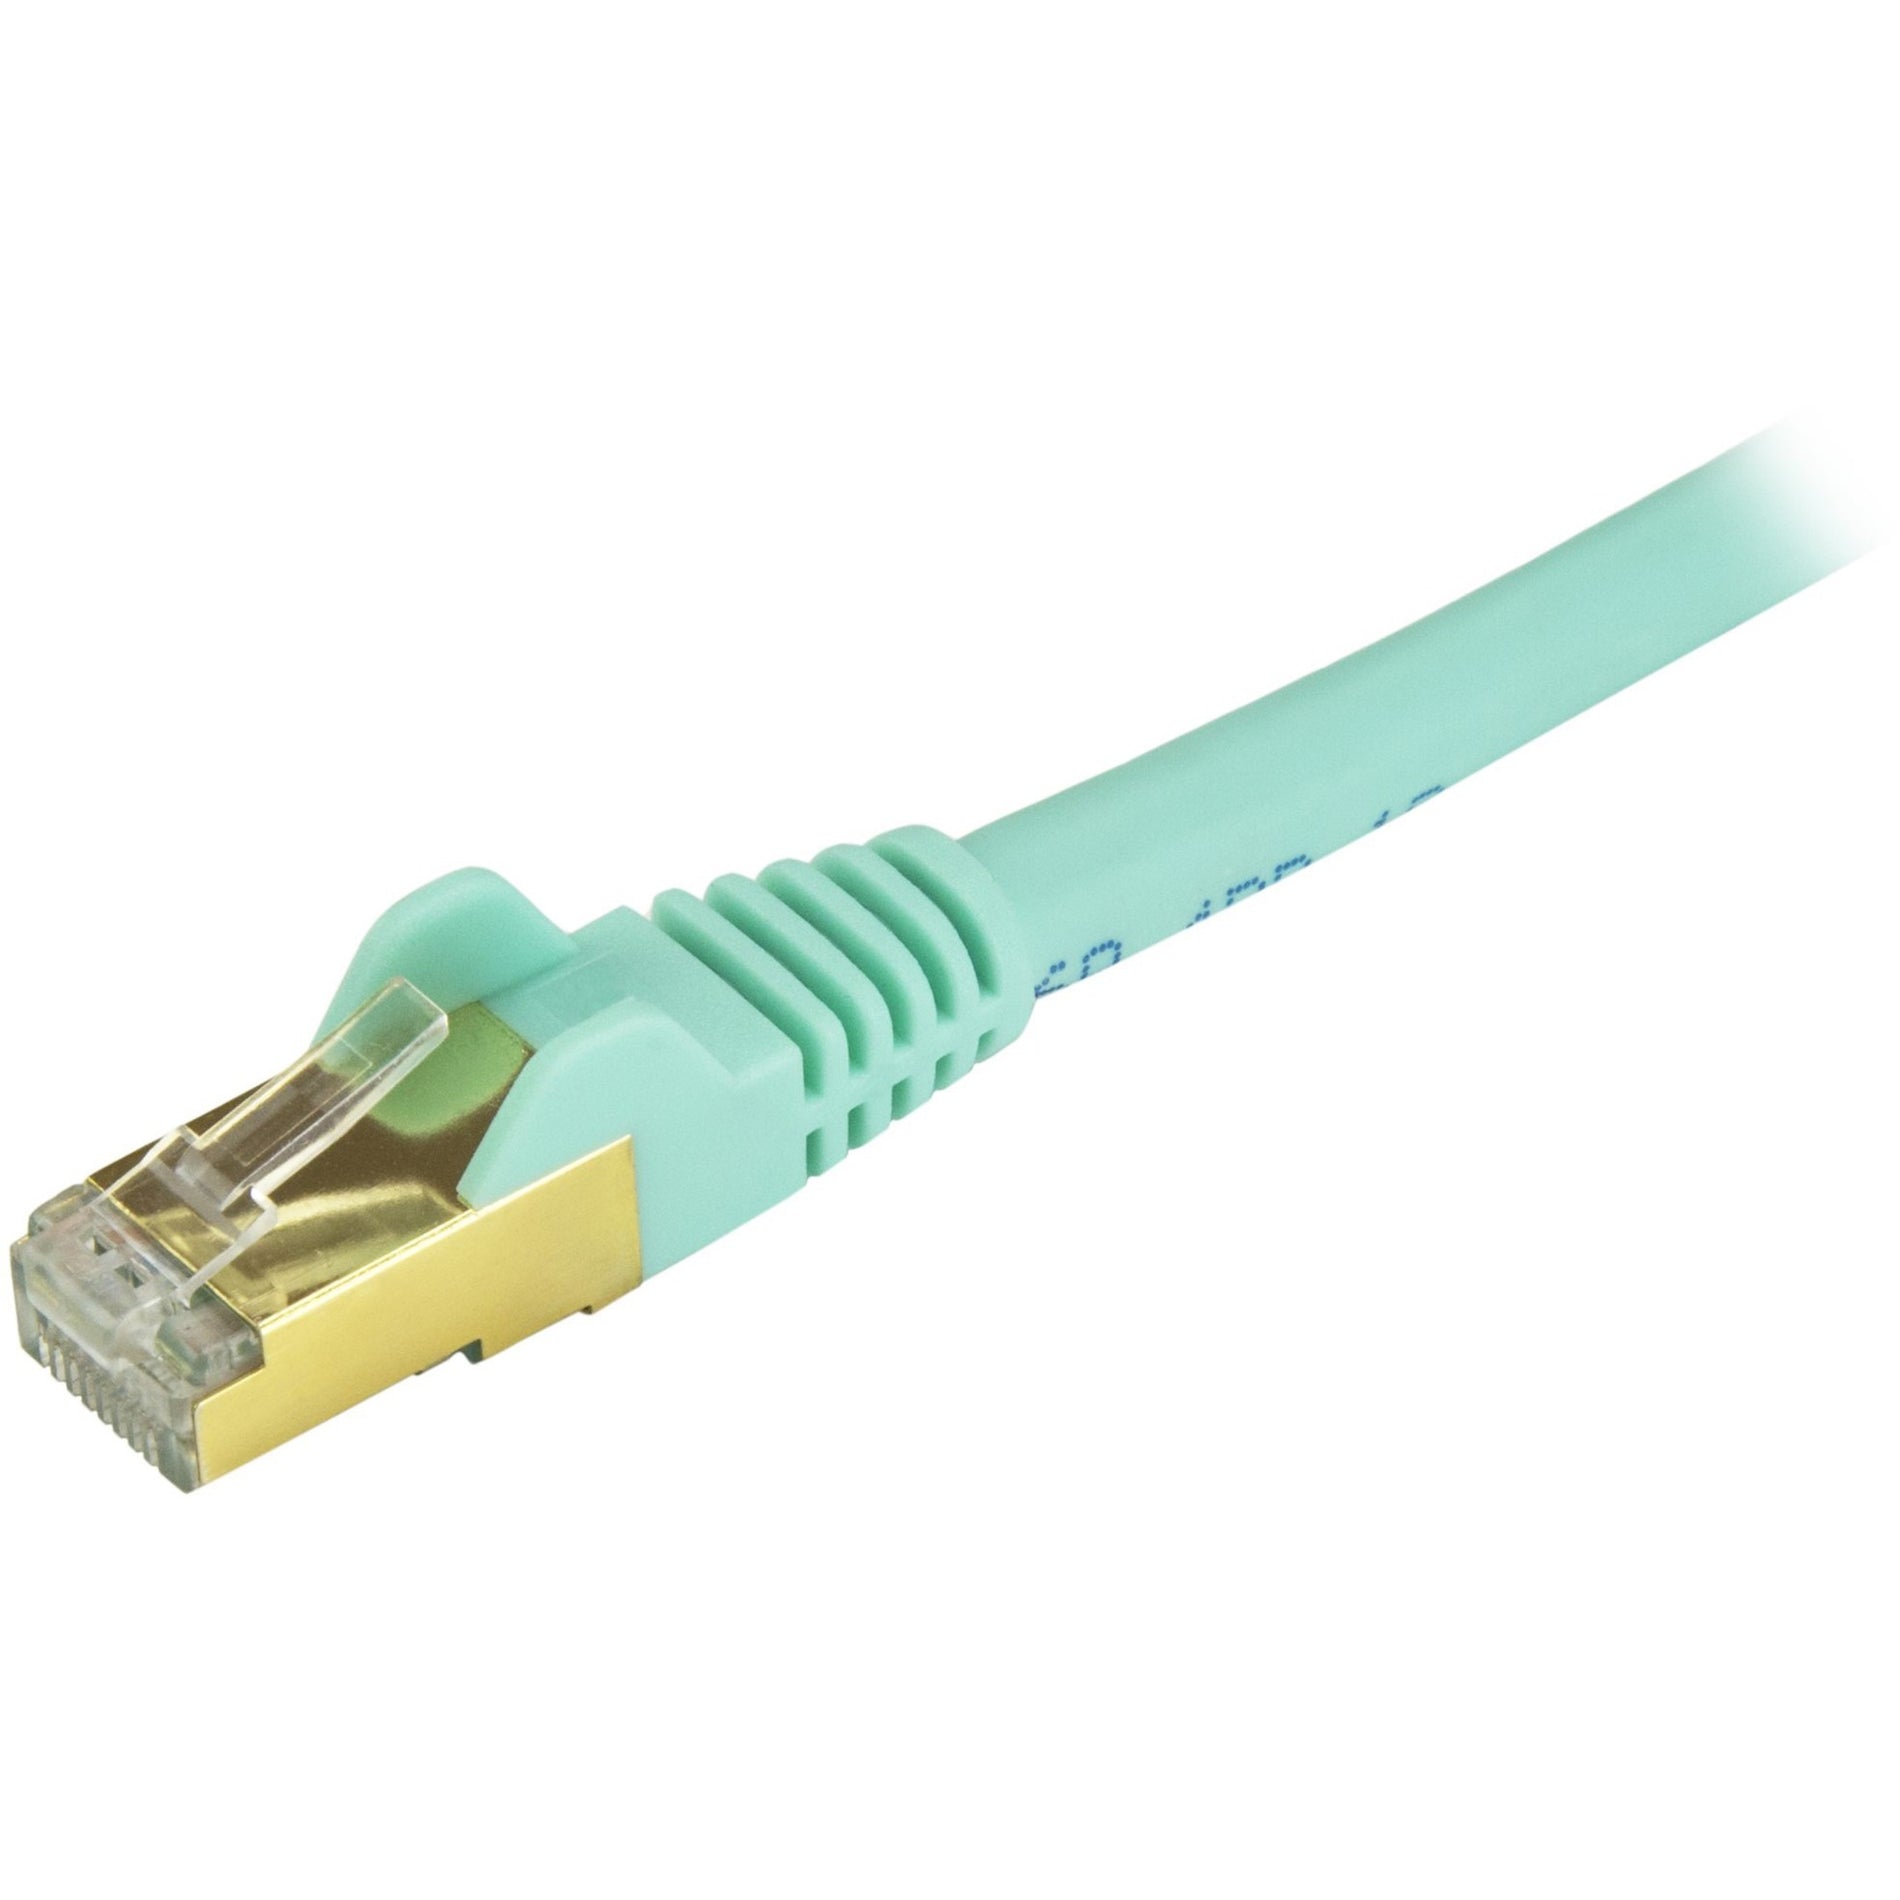 StarTech.com C6ASPAT4AQ Cat6a Ethernet Patch Cable - Shielded (STP) - 4 ft. Aqua Snagless RJ45 Ethernet Cord